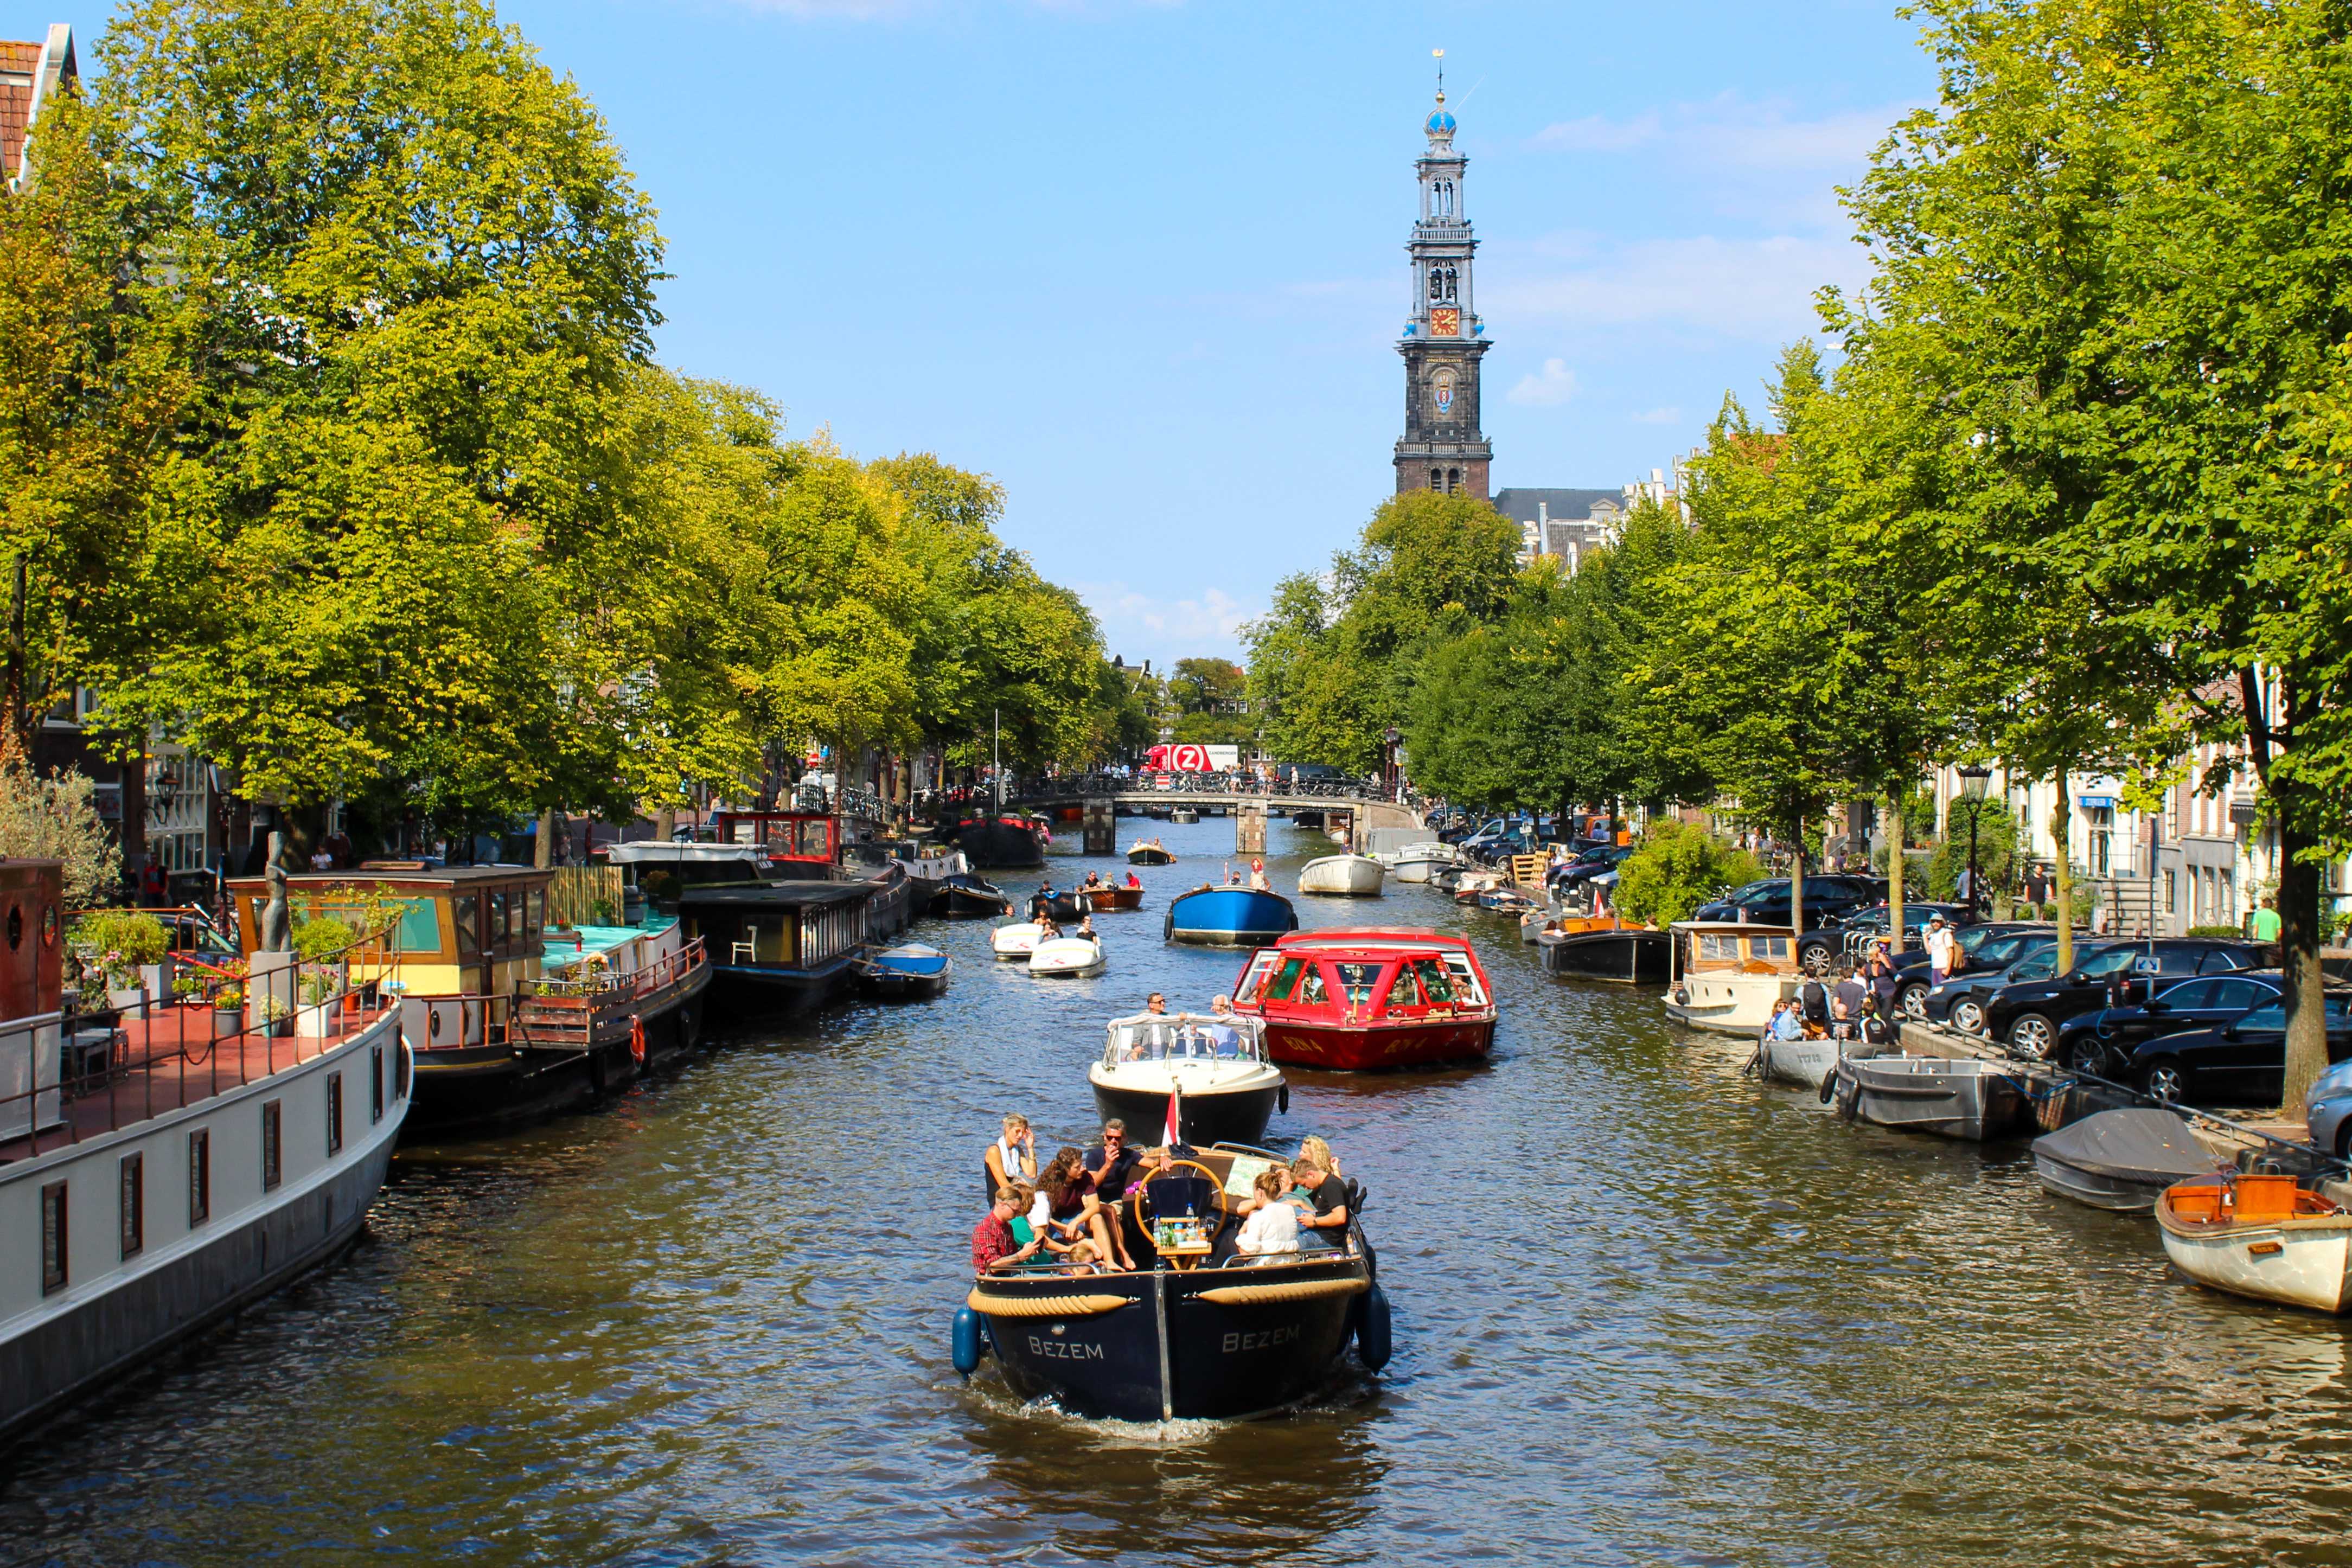 Friendship River Cruise , Amsterdam: All year round